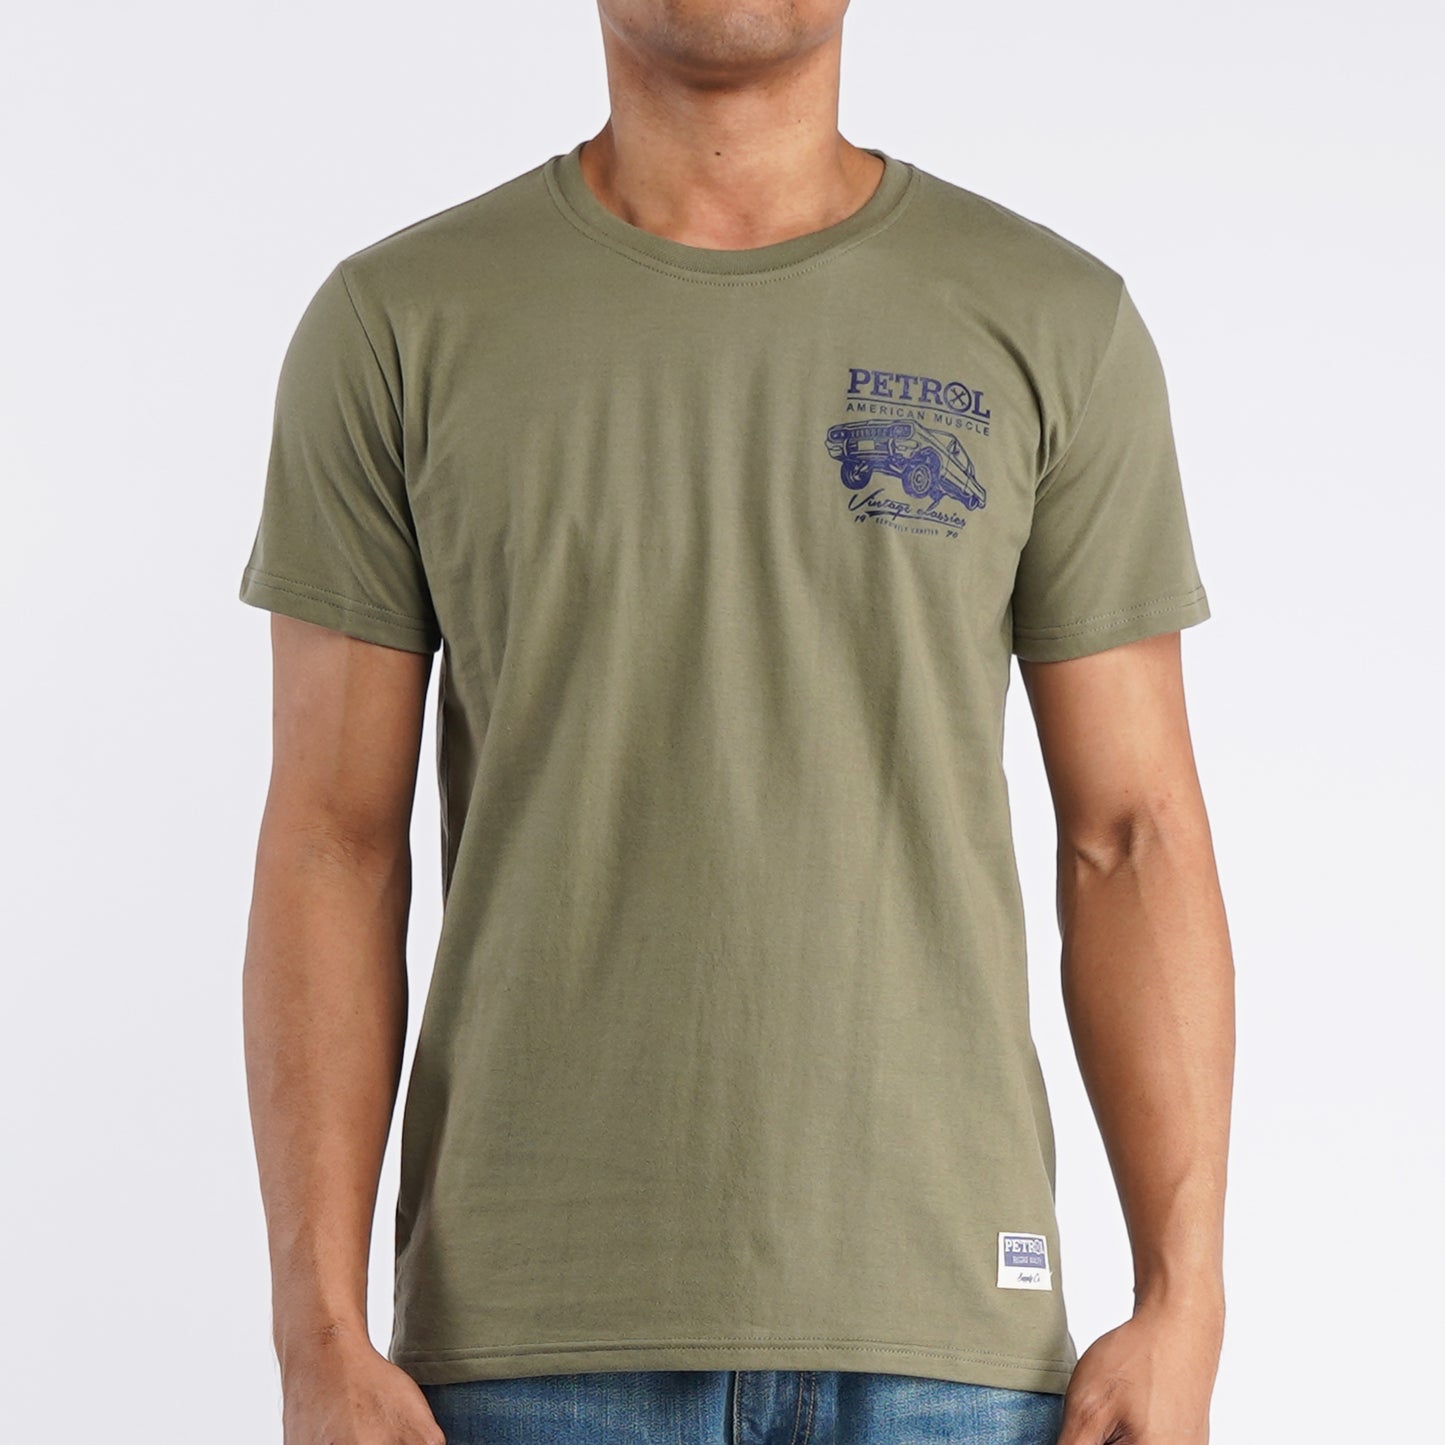 Petrol Basic Tees for Men Slim Fitting Shirt CVC Jersey Fabric Trendy fashion Casual Top Fatigue T-shirt for Men 126932-U (Fatigue)